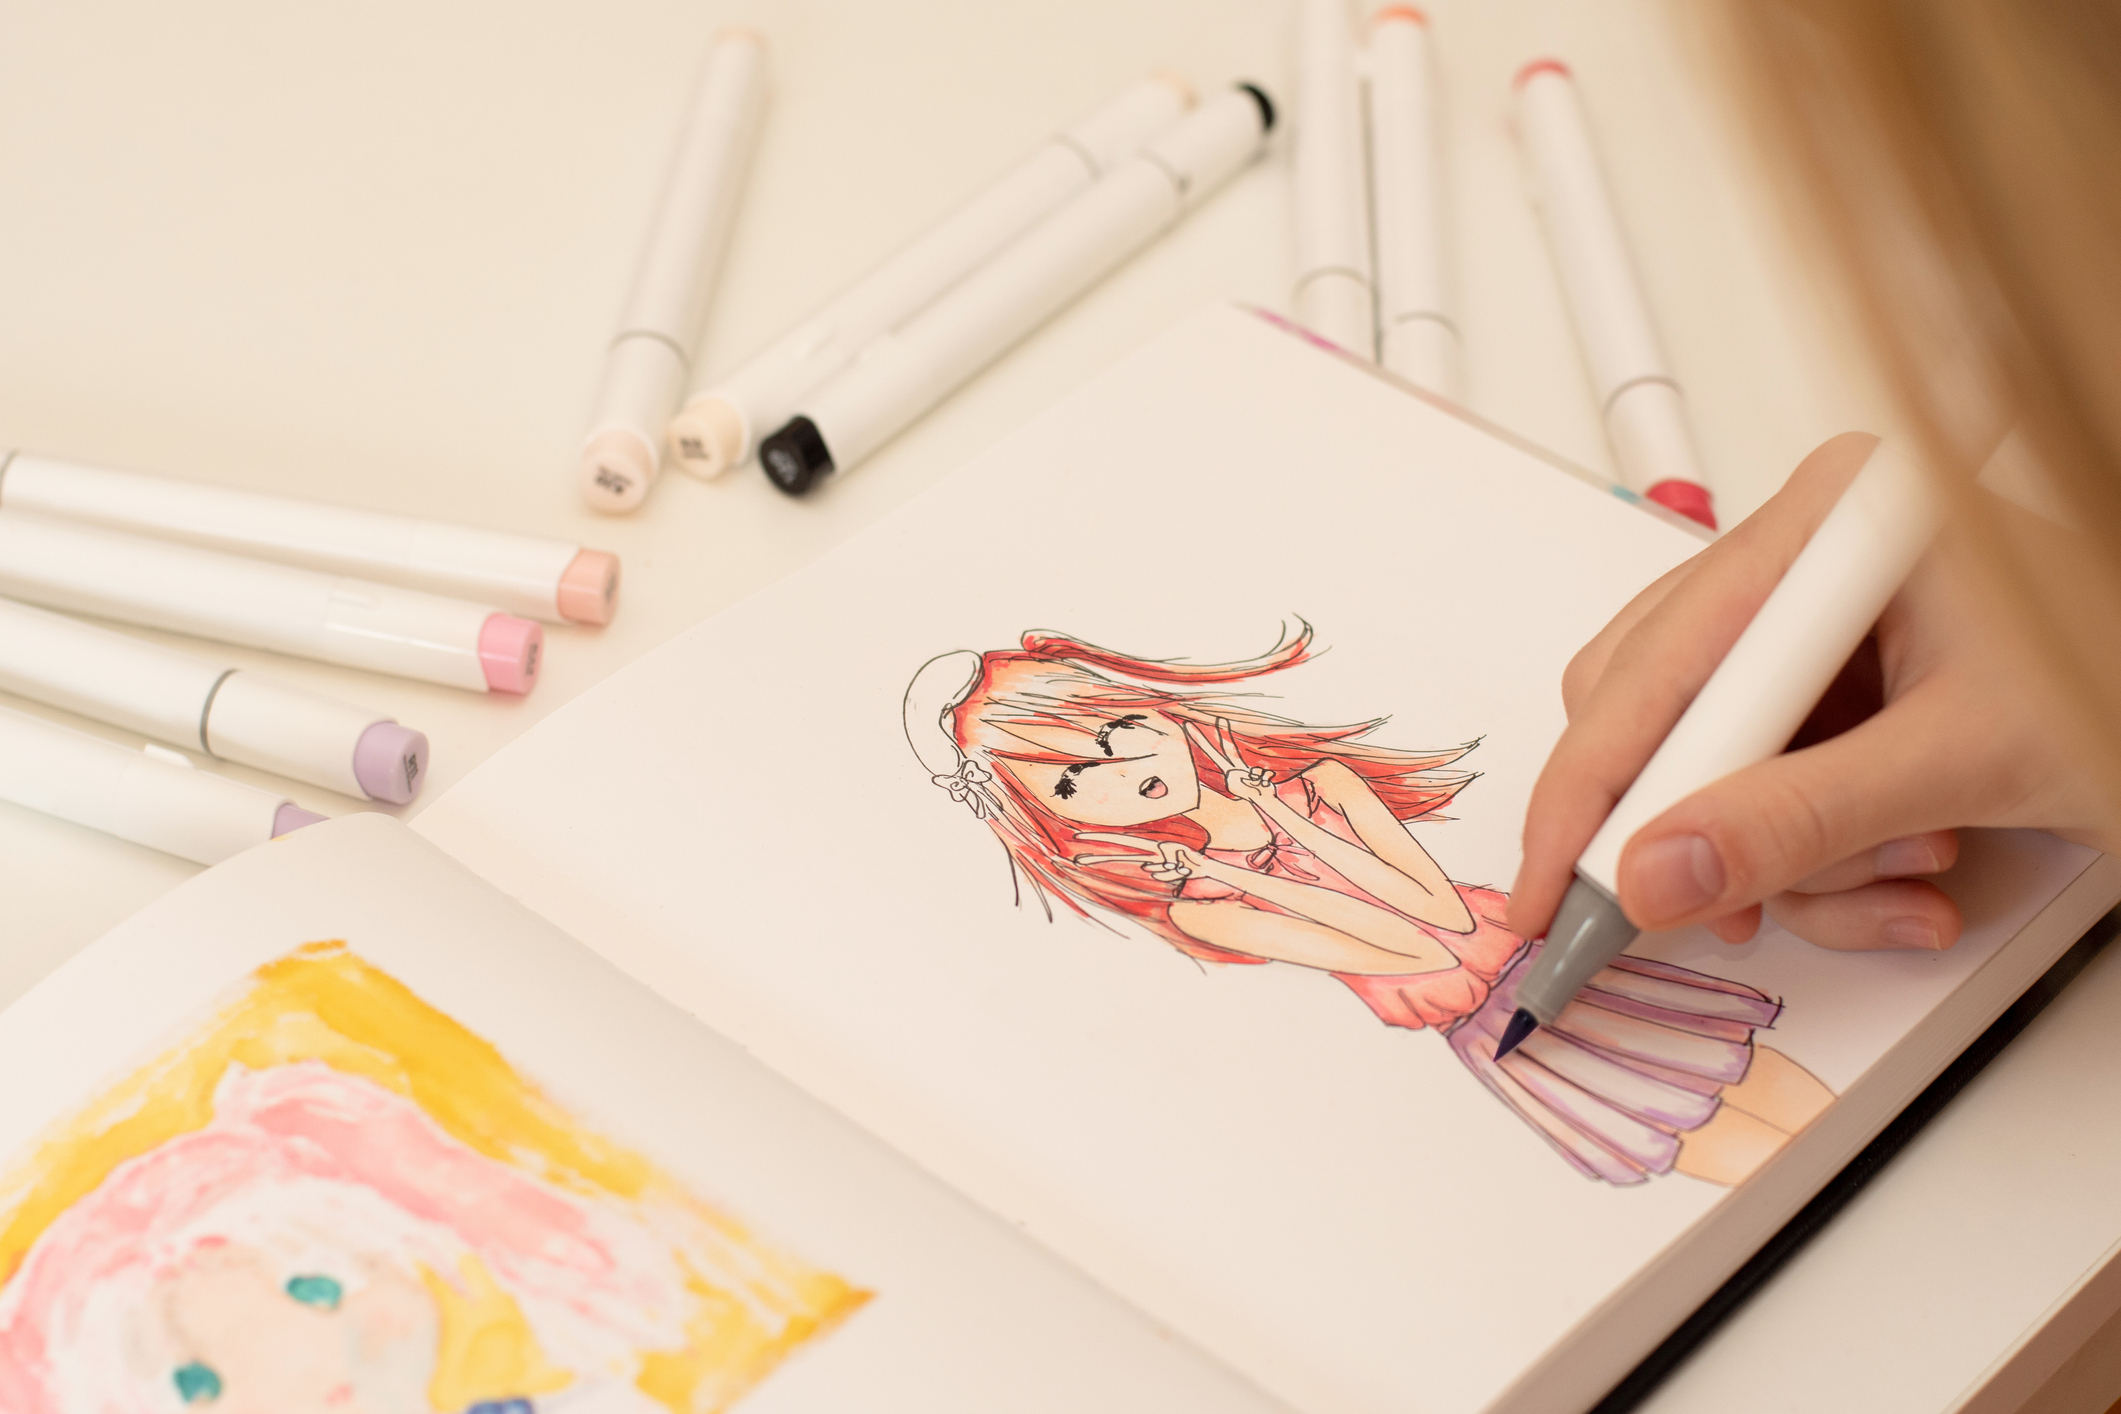 Drawing - Ram From Re:Zero (With Ohuhu Markers!) Anime | Manga - YouTube